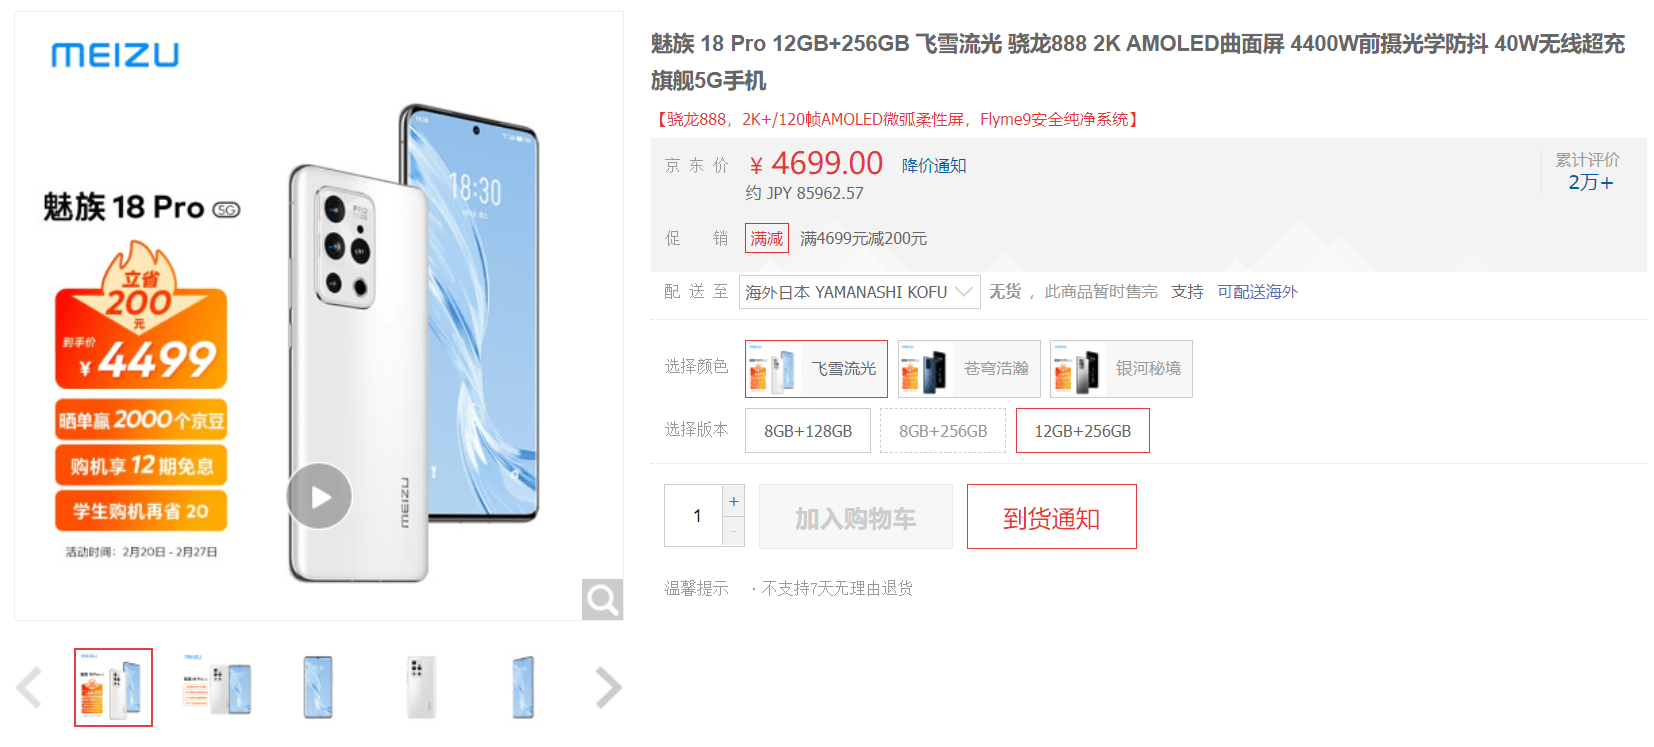 Meizu 18 Proの12GB+256GB版が売り切れ、次回の販売は未定